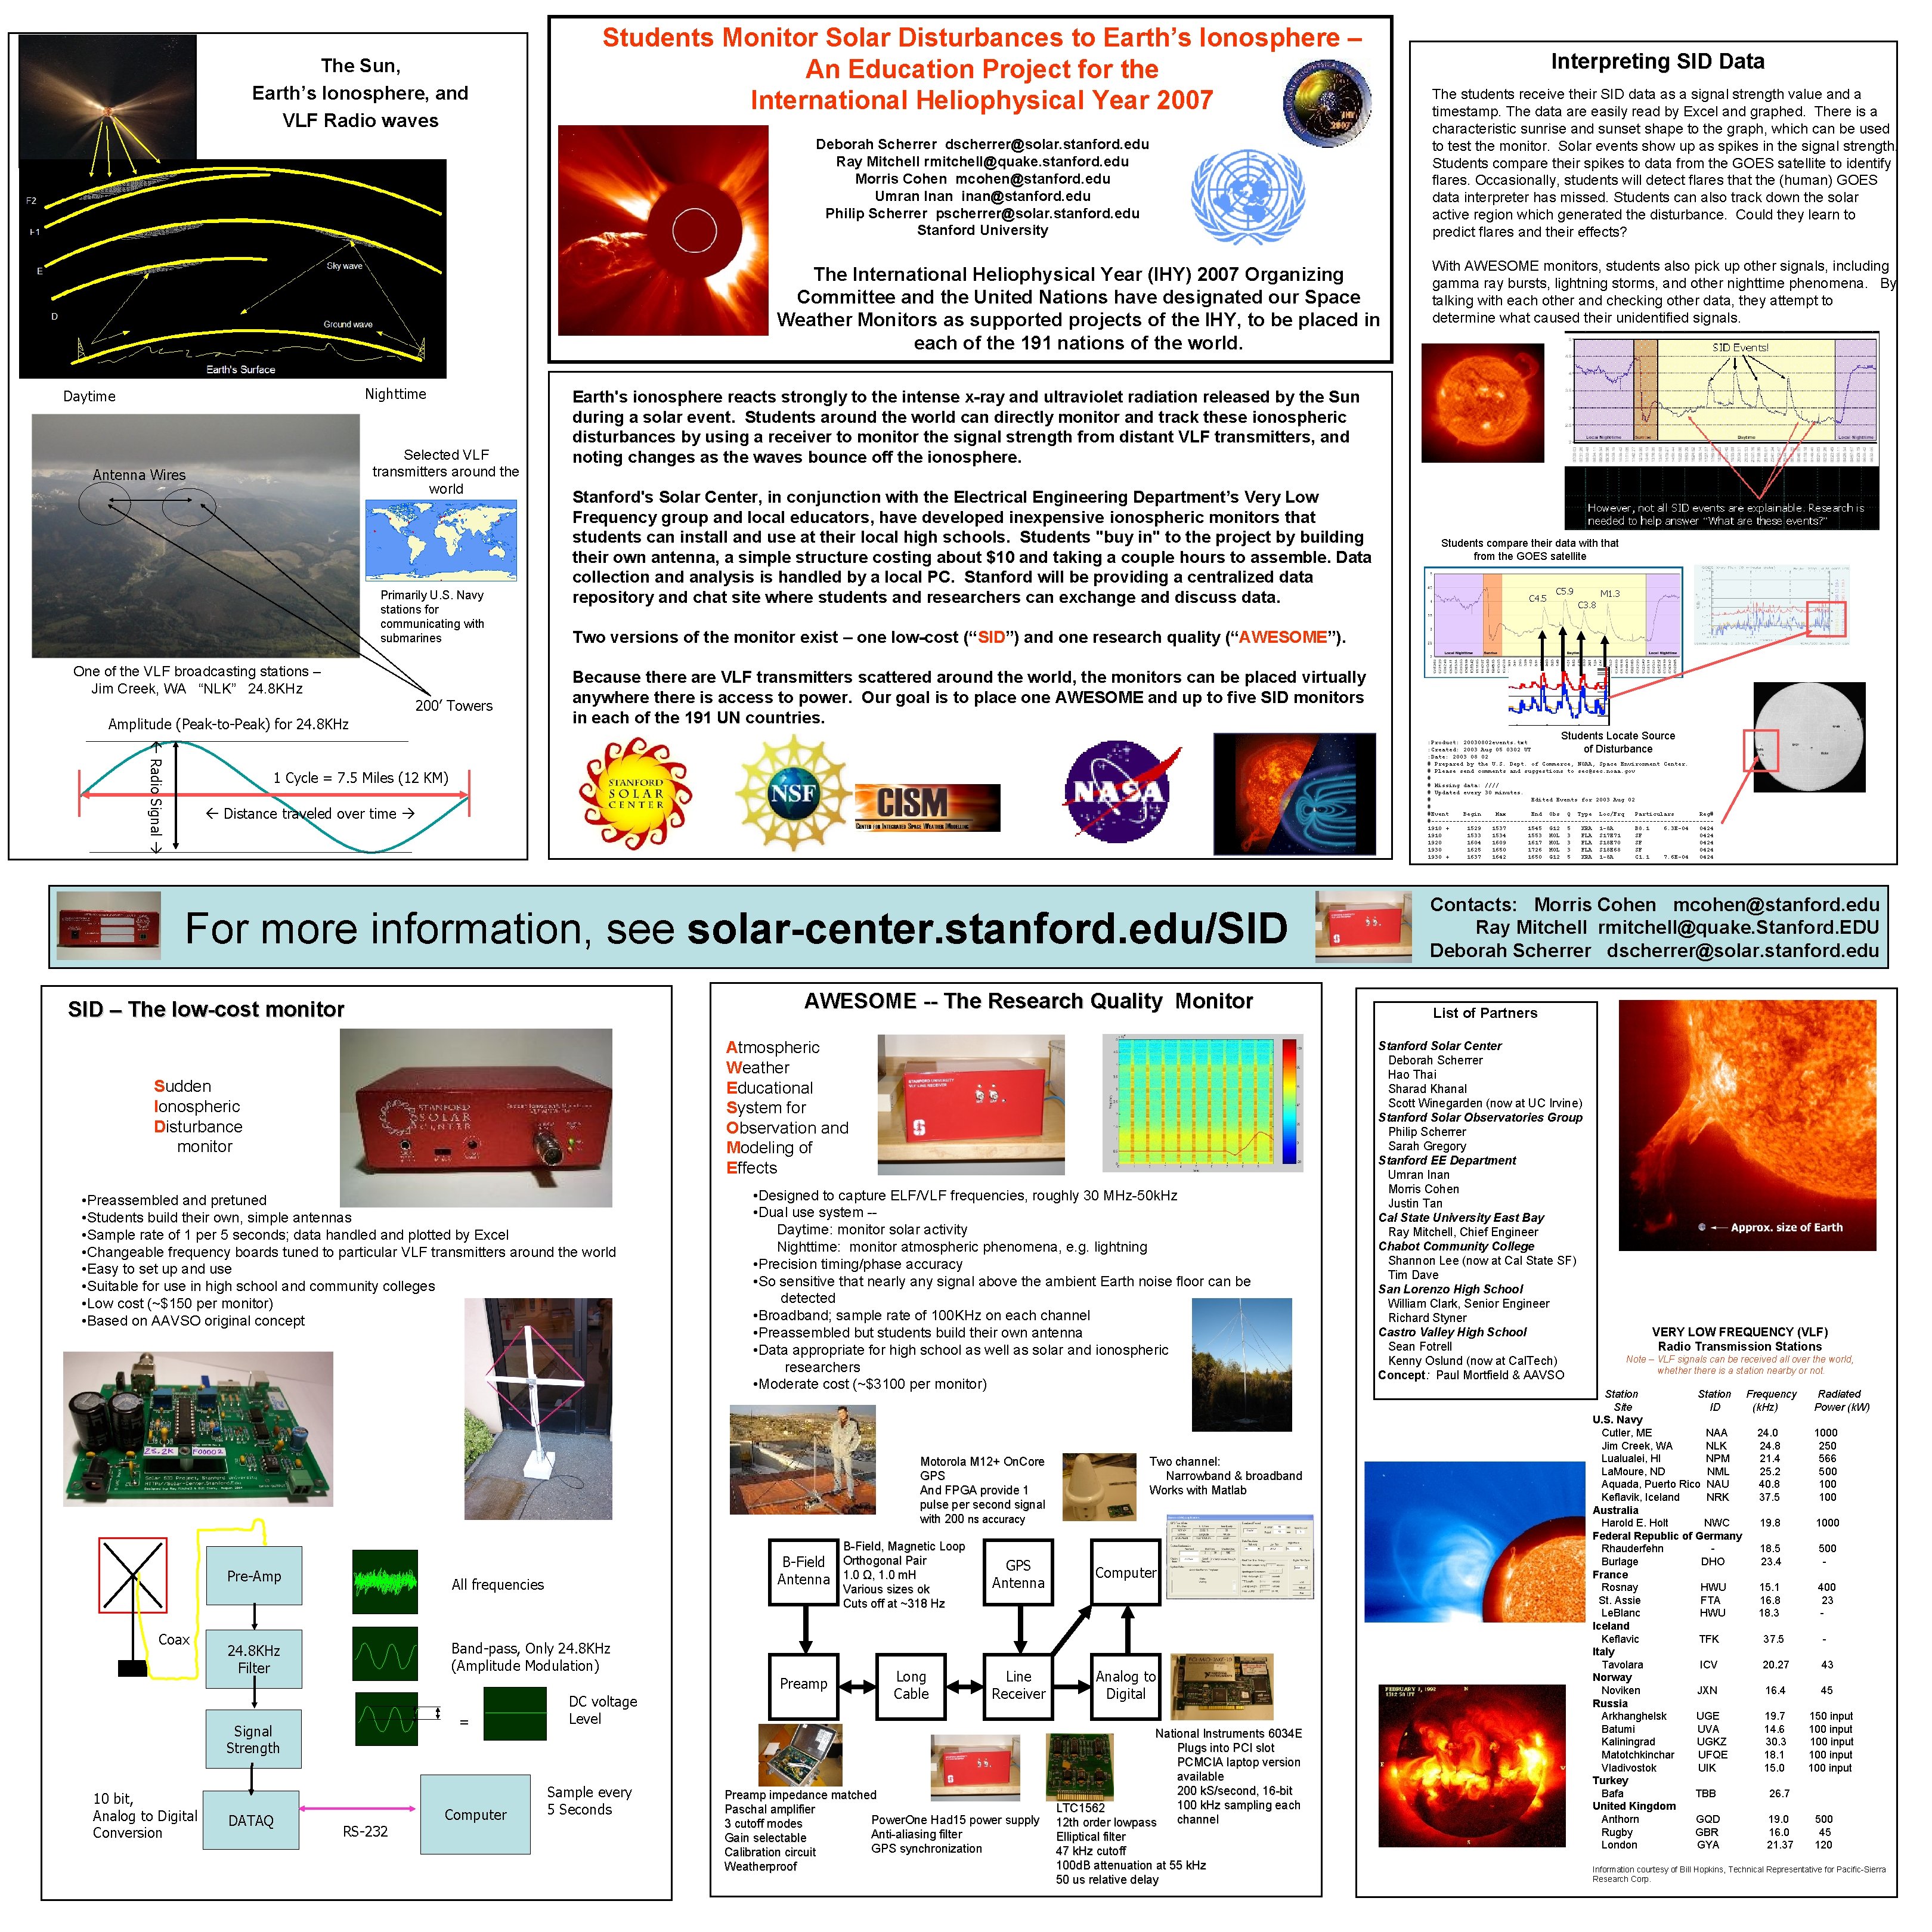 The Sun, Earth’s Ionosphere, and VLF Radio waves Students Monitor Solar Disturbances to Earth’s